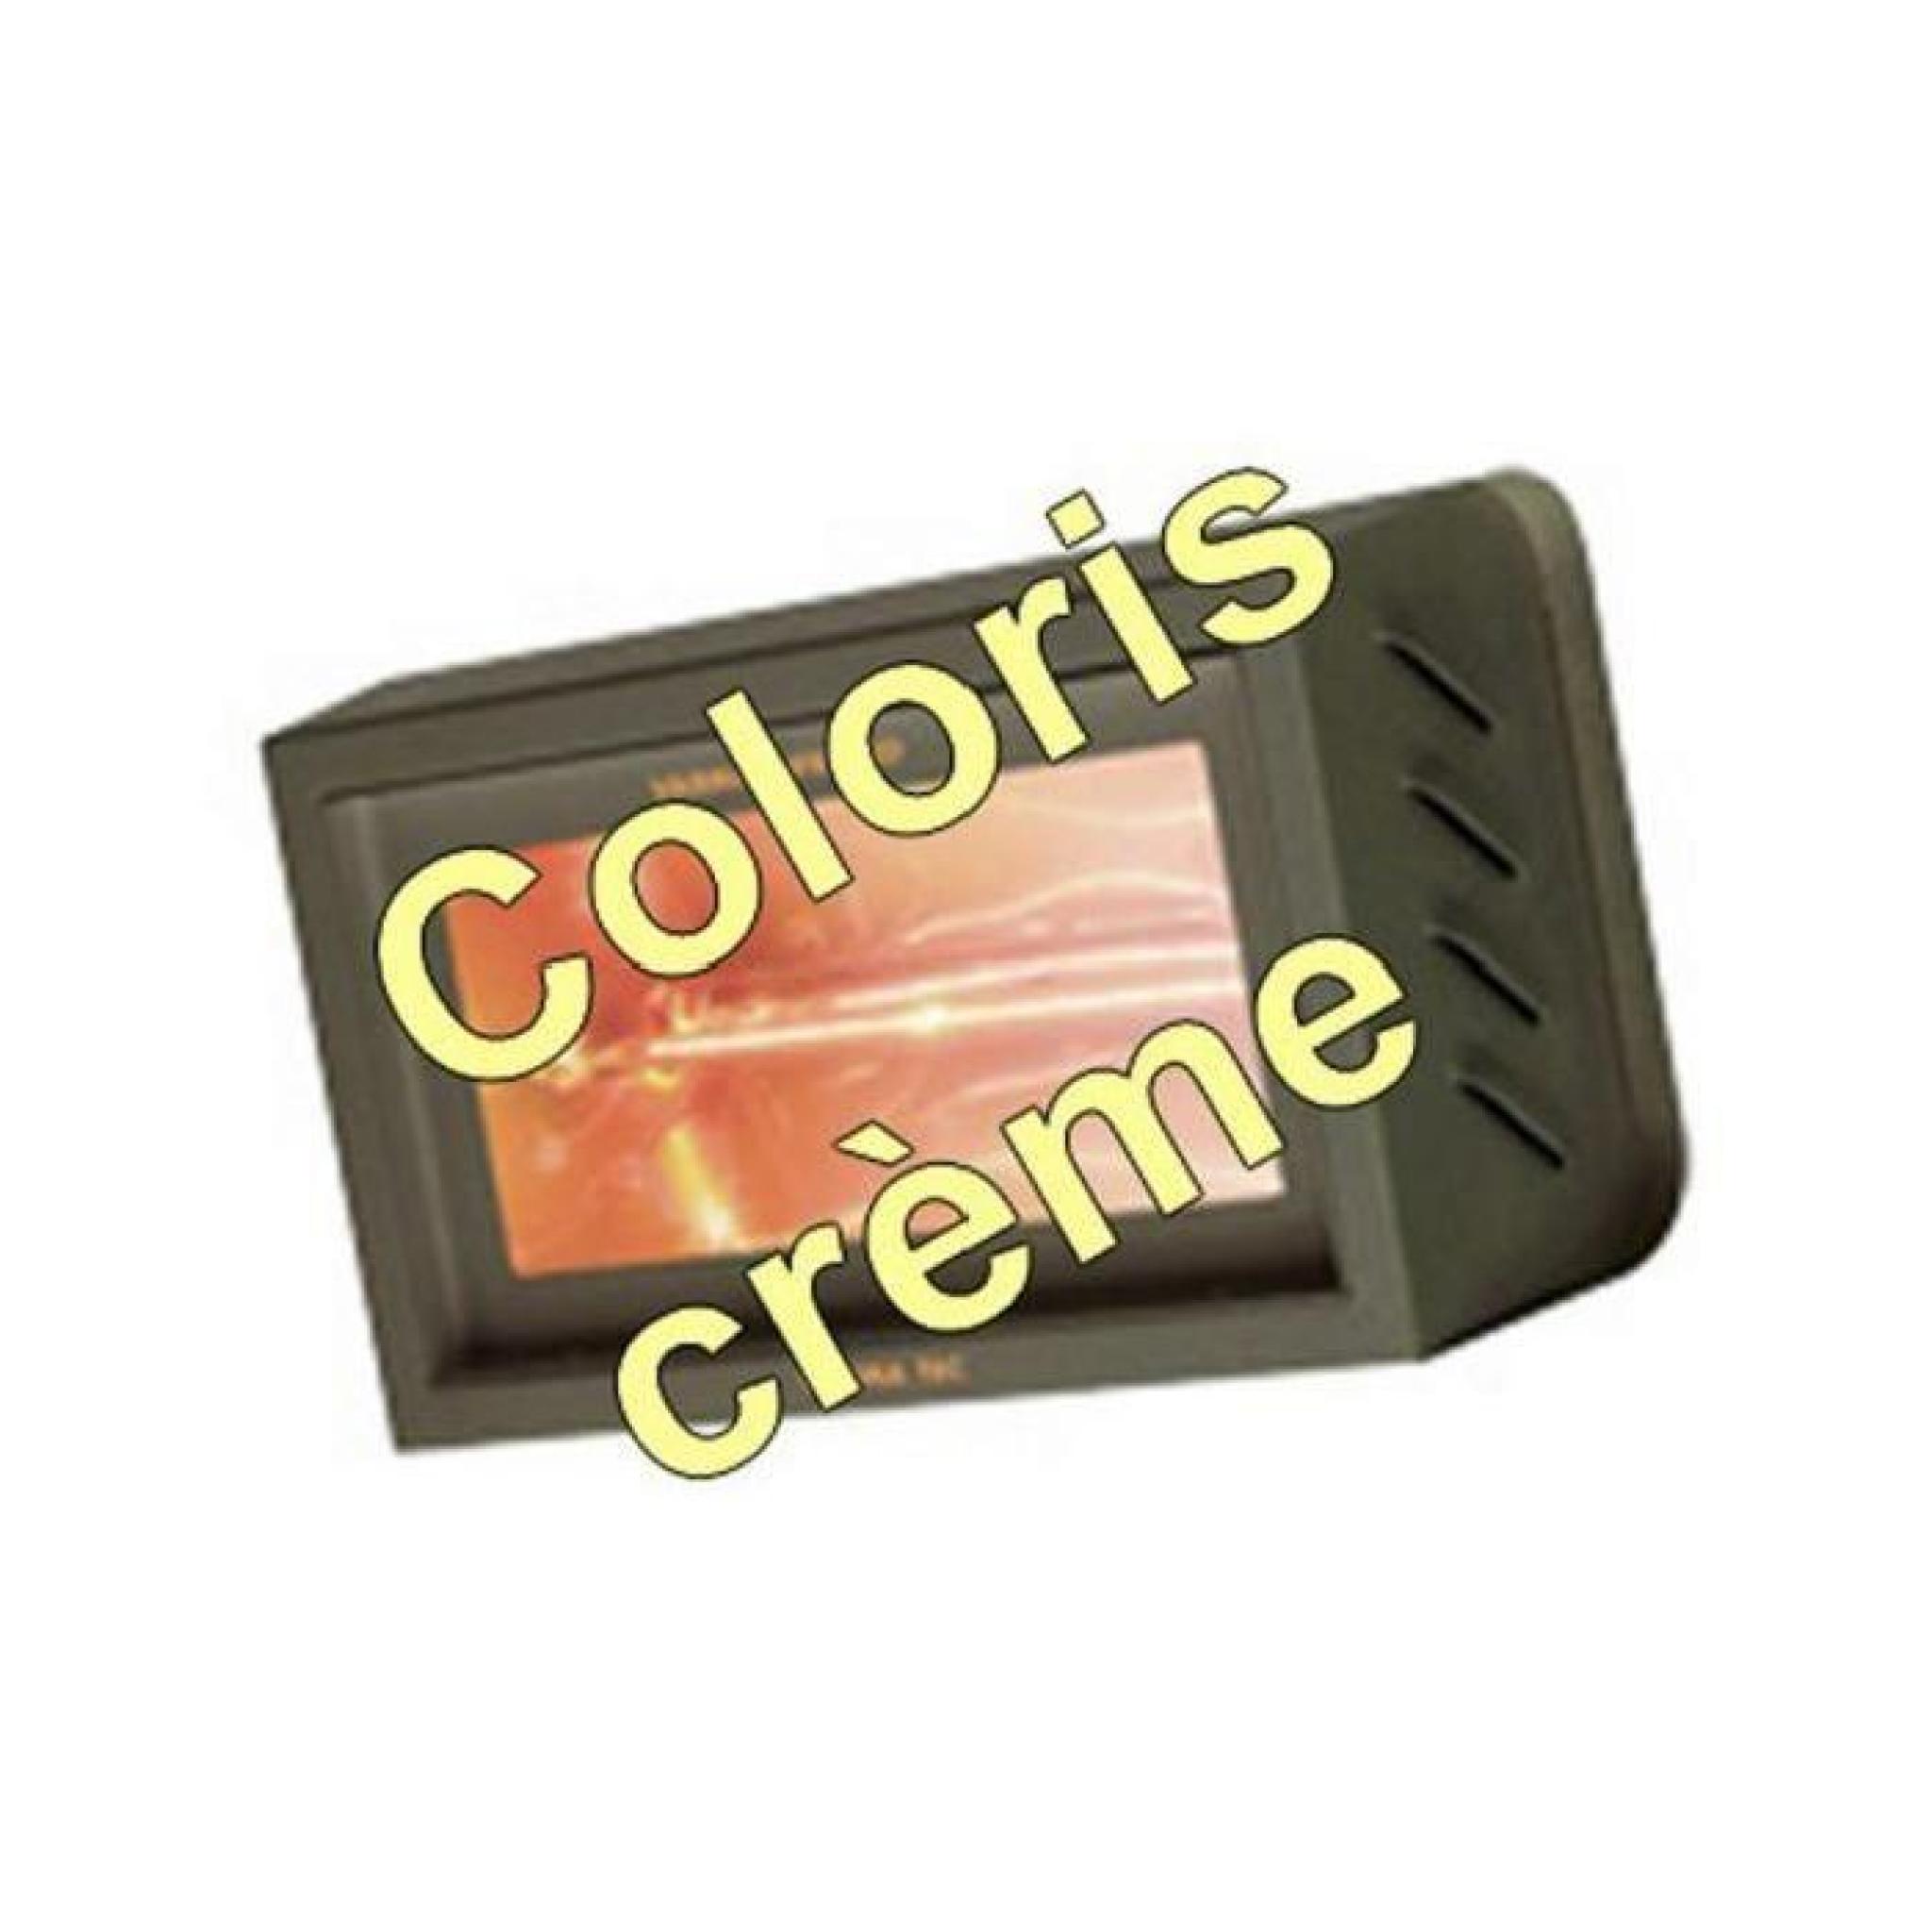 Chauffage infrarouge 2000W VARMA400 Coloris Crème pas cher